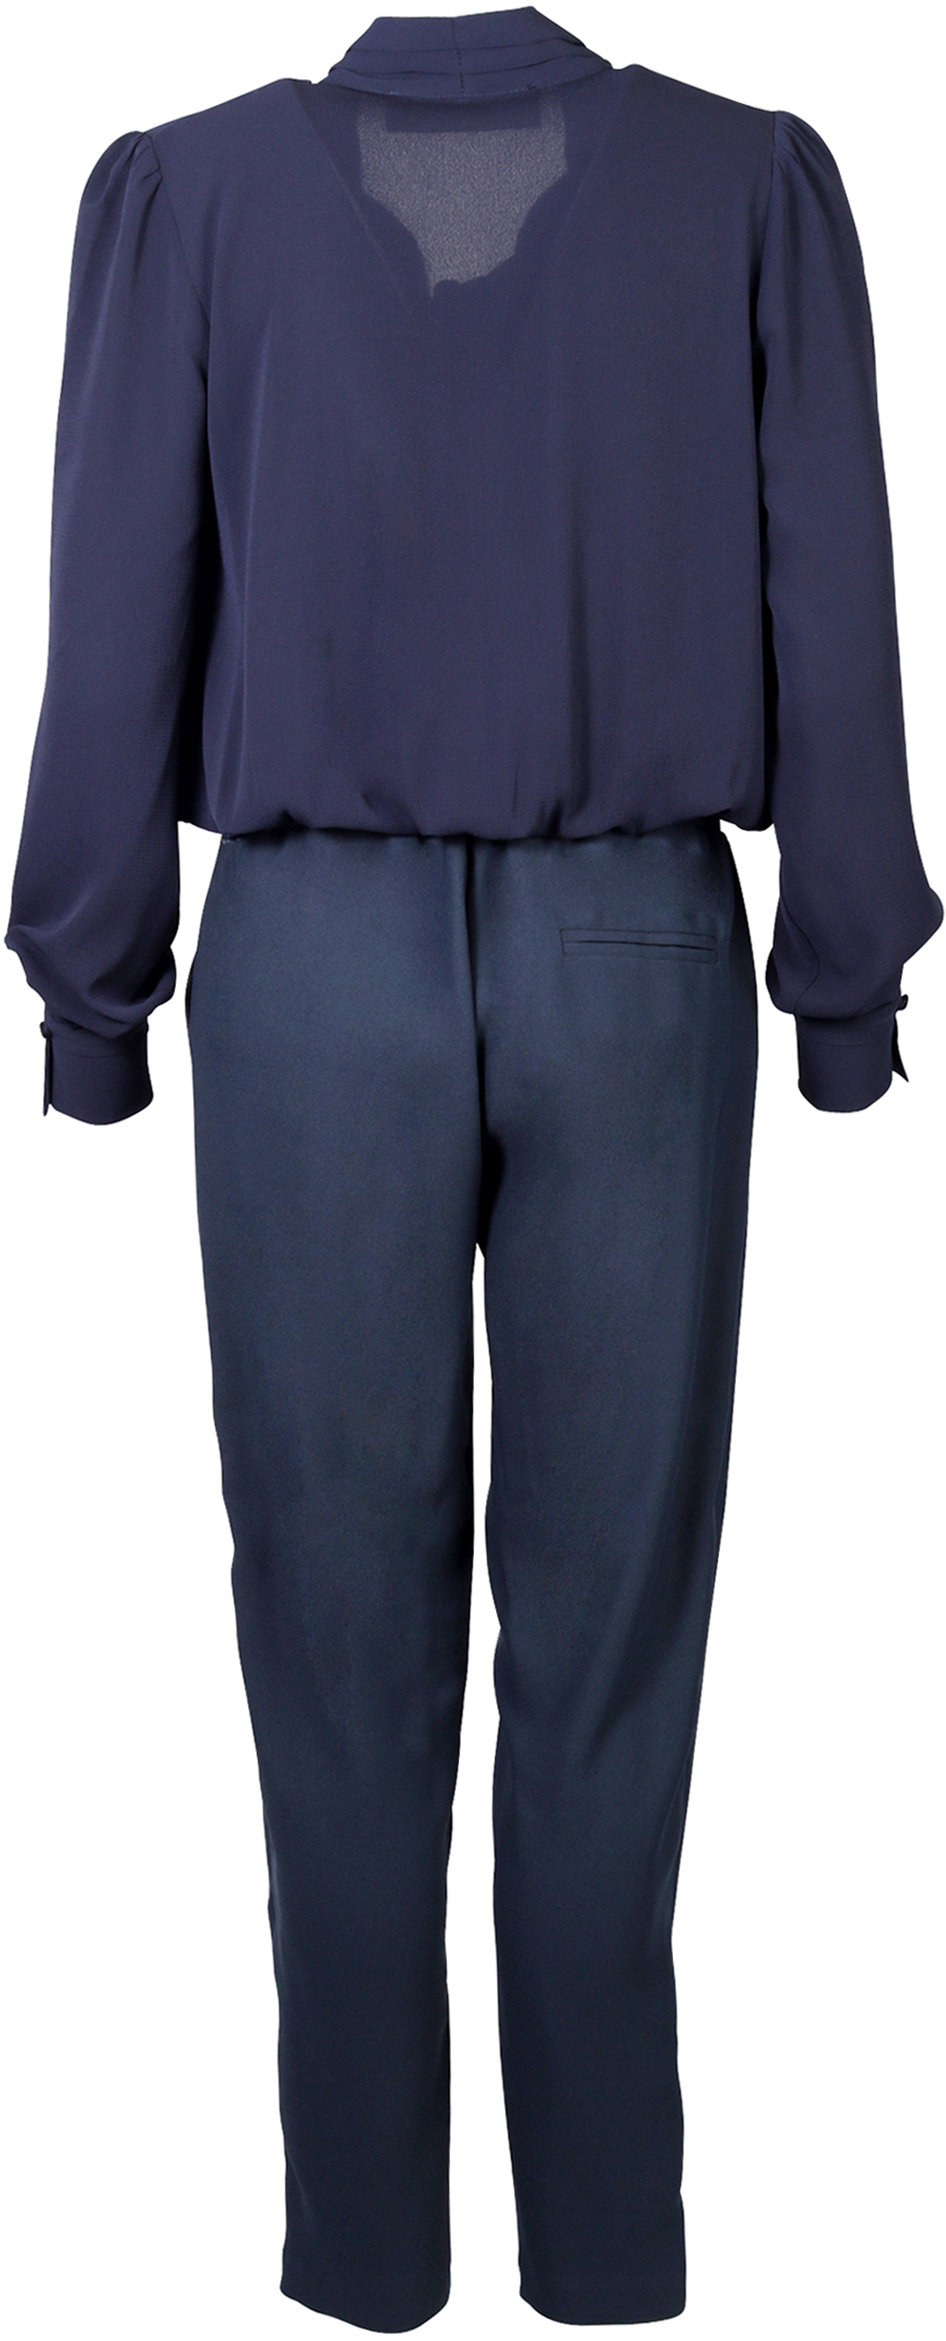 shirtaporter jumpsuit navy 40